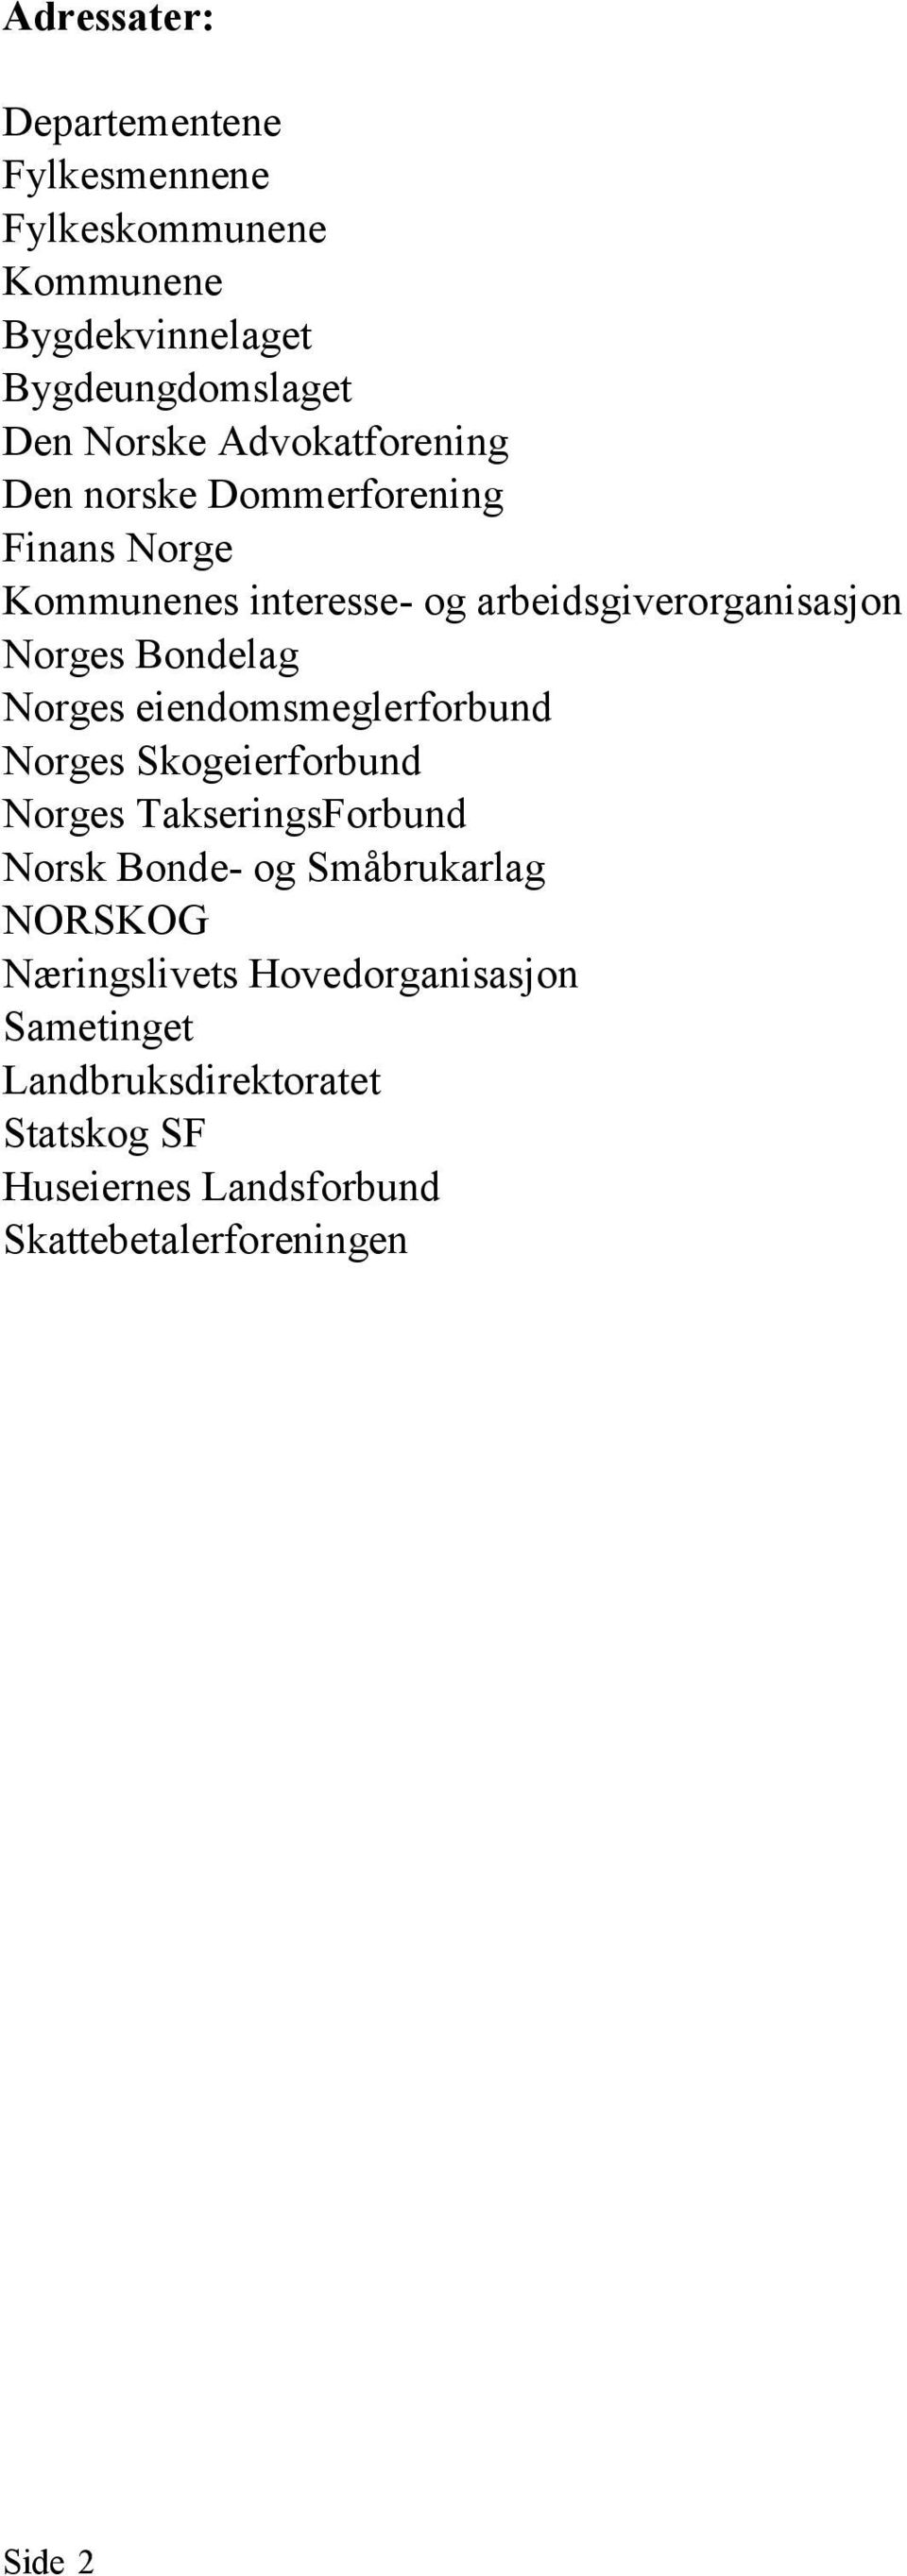 Bondelag Norges eiendomsmeglerforbund Norges Skogeierforbund Norges TakseringsForbund Norsk Bonde- og Småbrukarlag